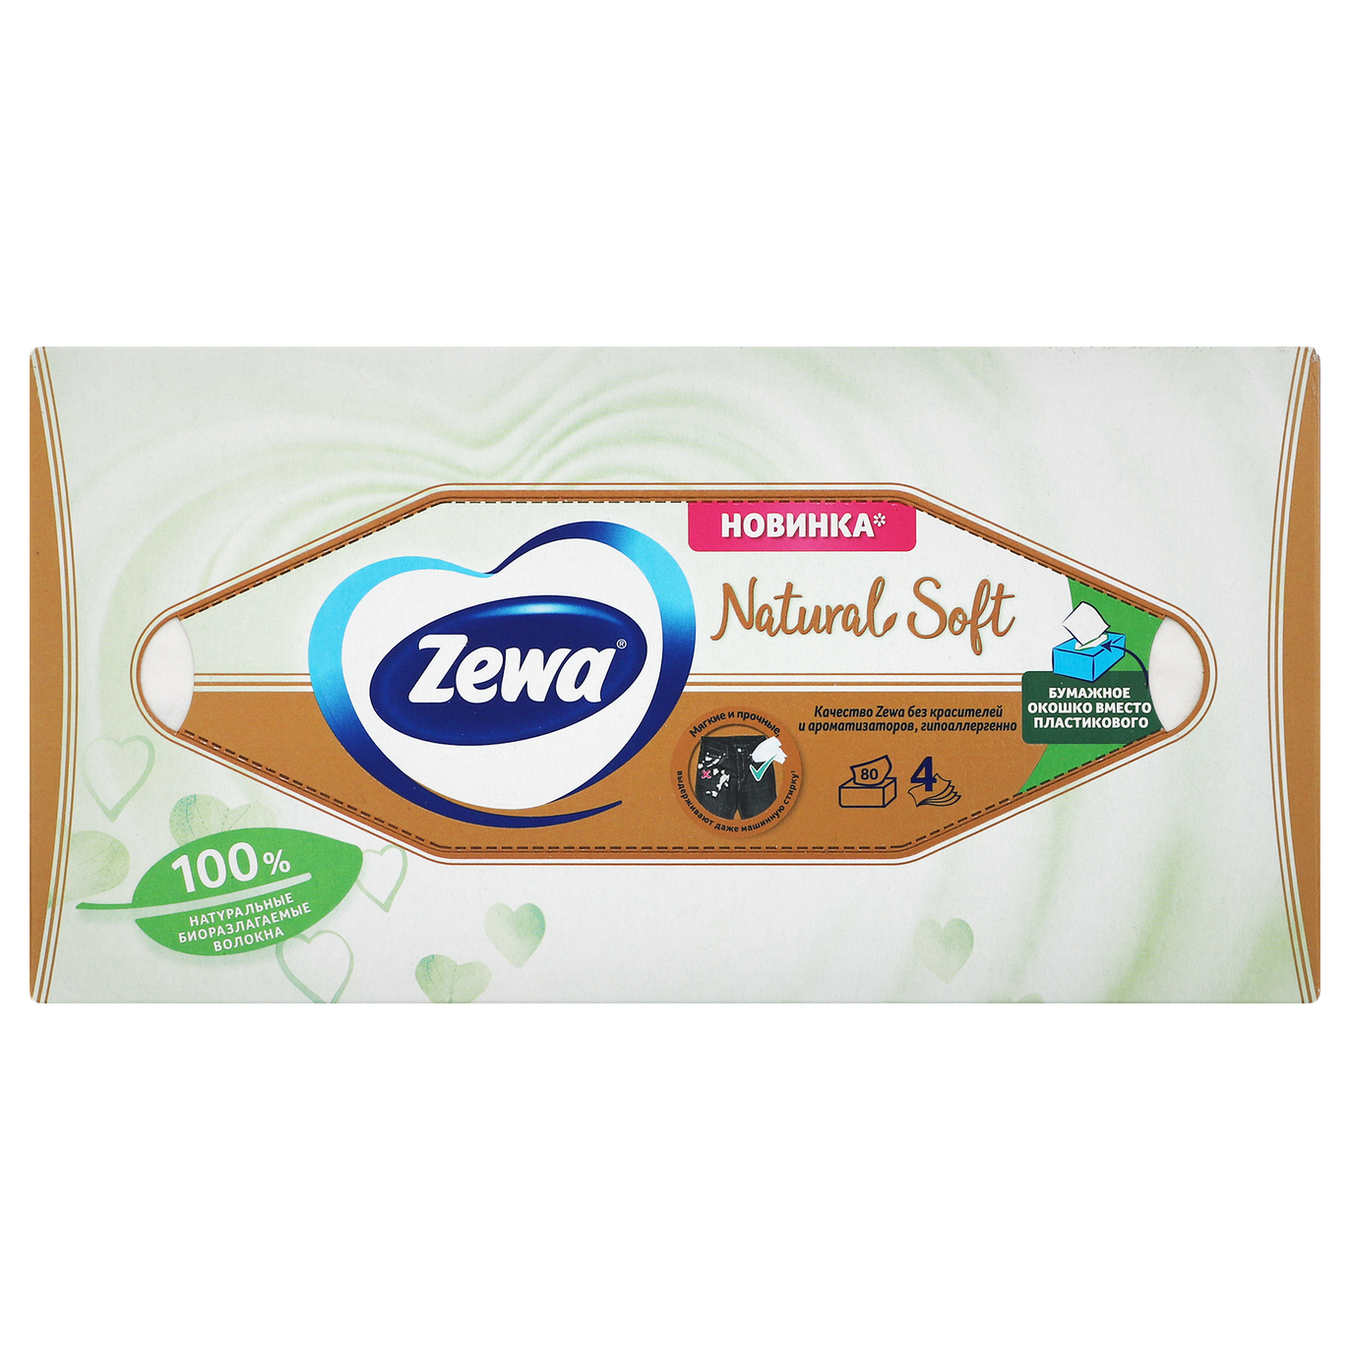 Серветки паперові Zewa Natural Soft косметичні 80шт/уп